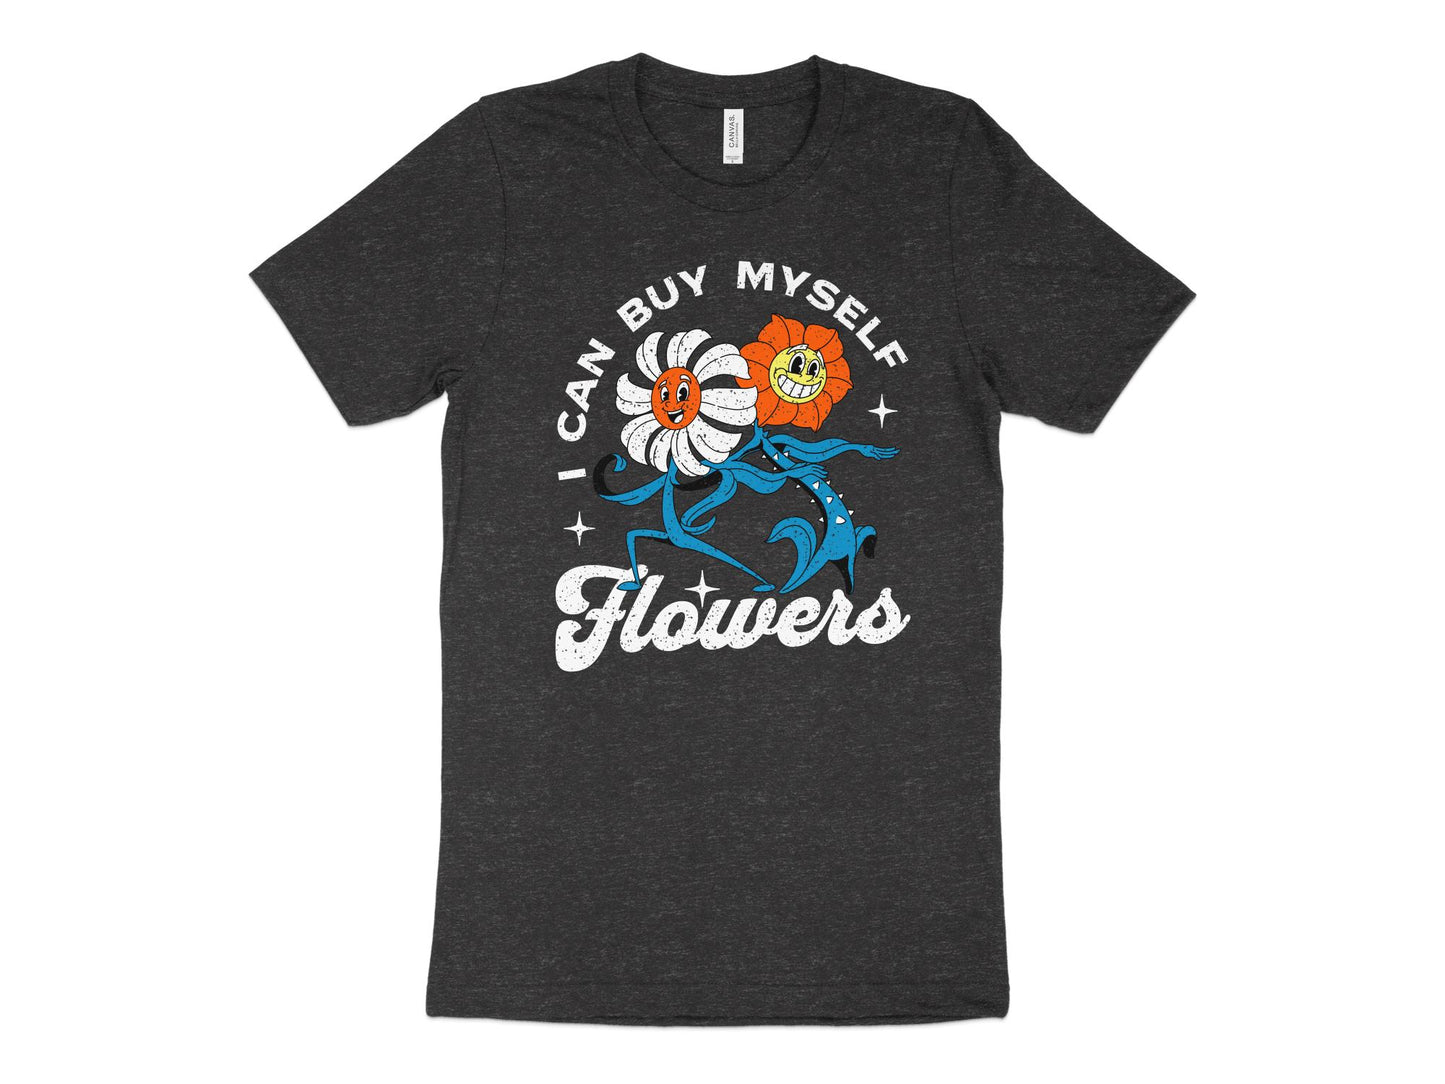 I Can Buy Myself Flowers Shirt charcoal